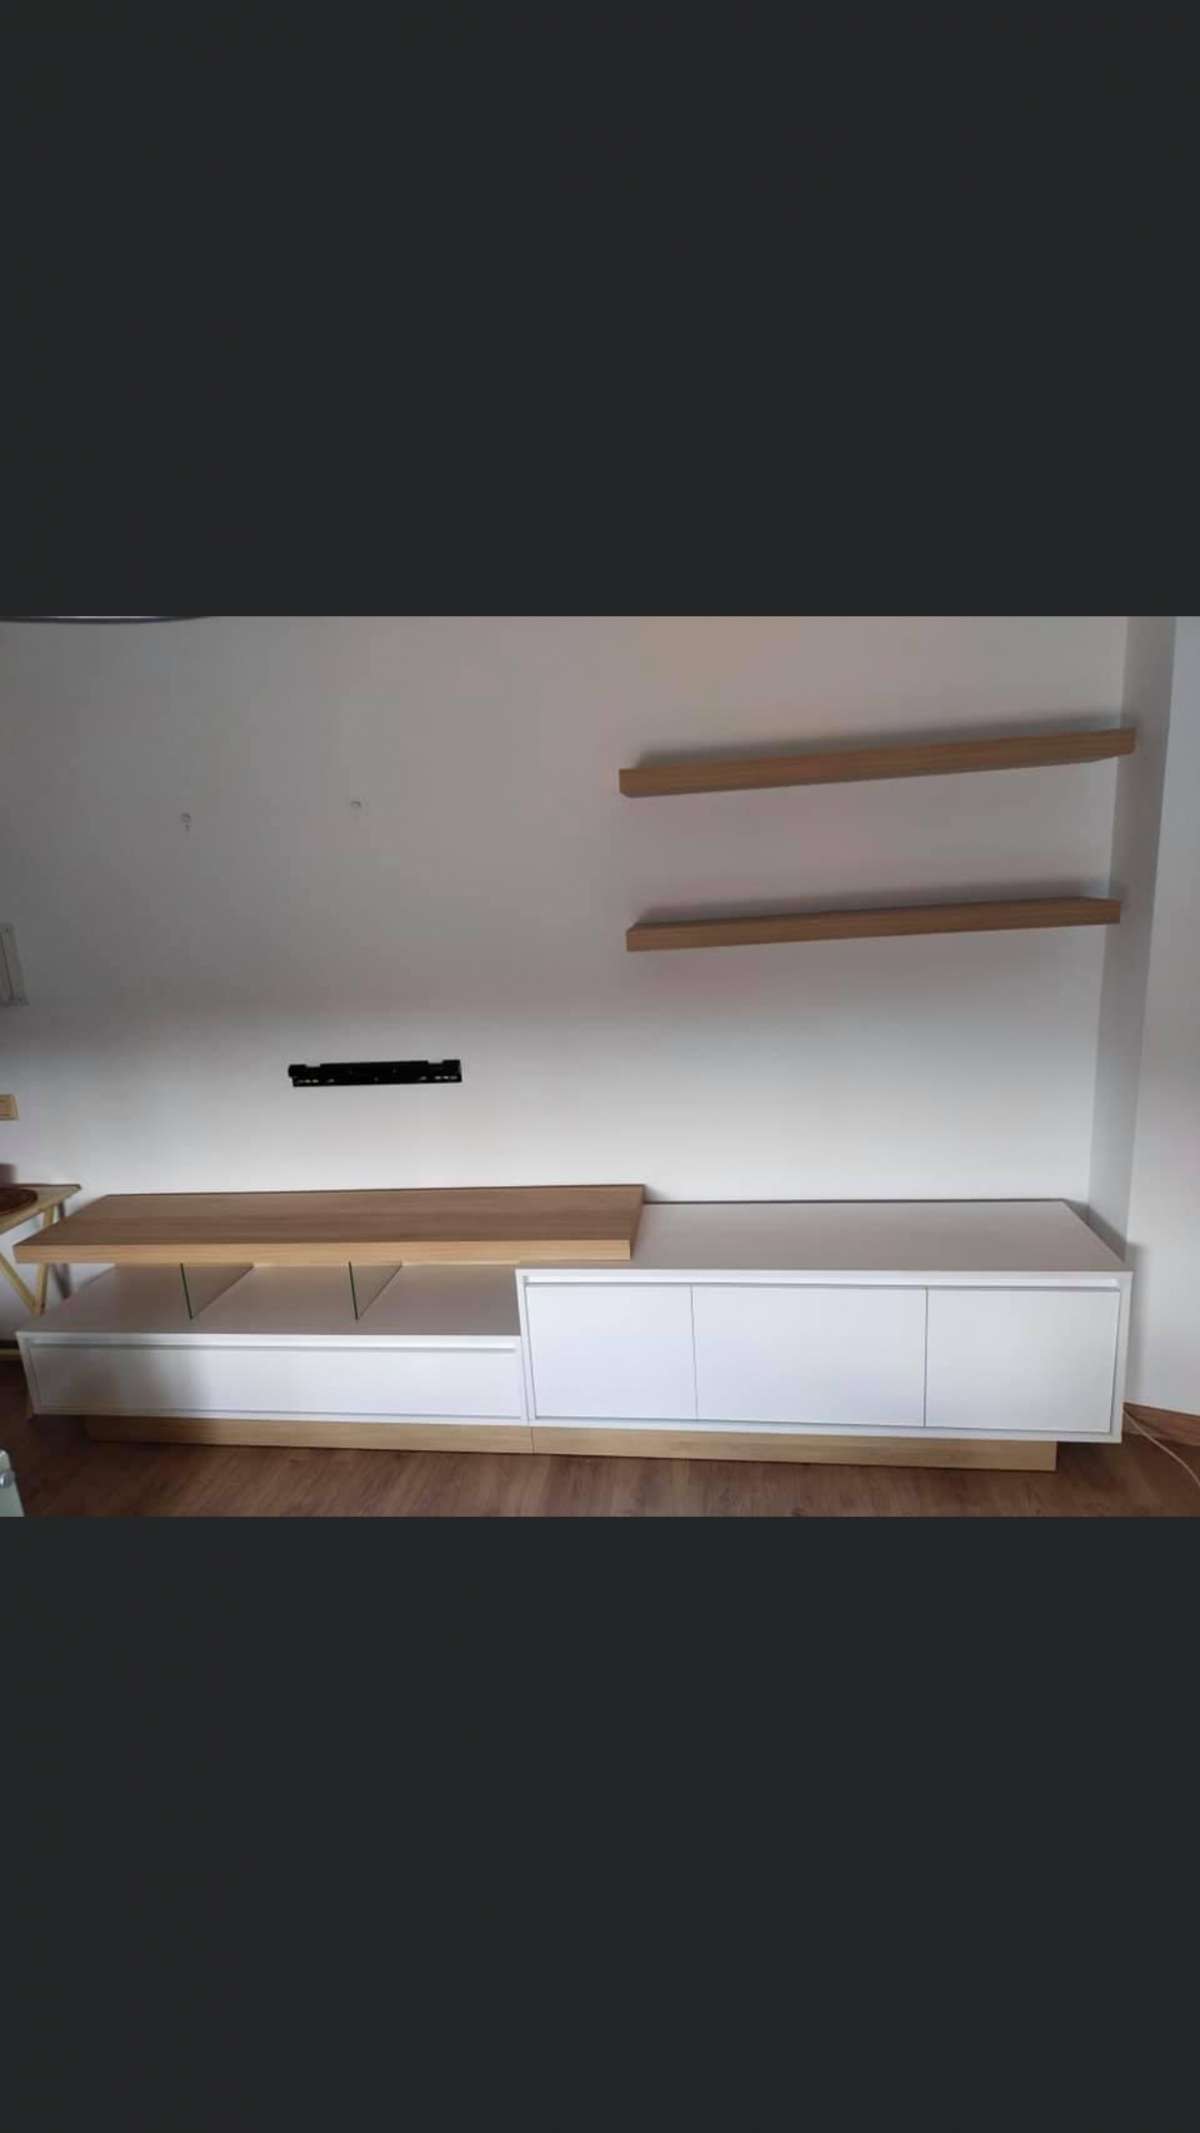 Montajes pedri - Alcàsser - Montaje de muebles